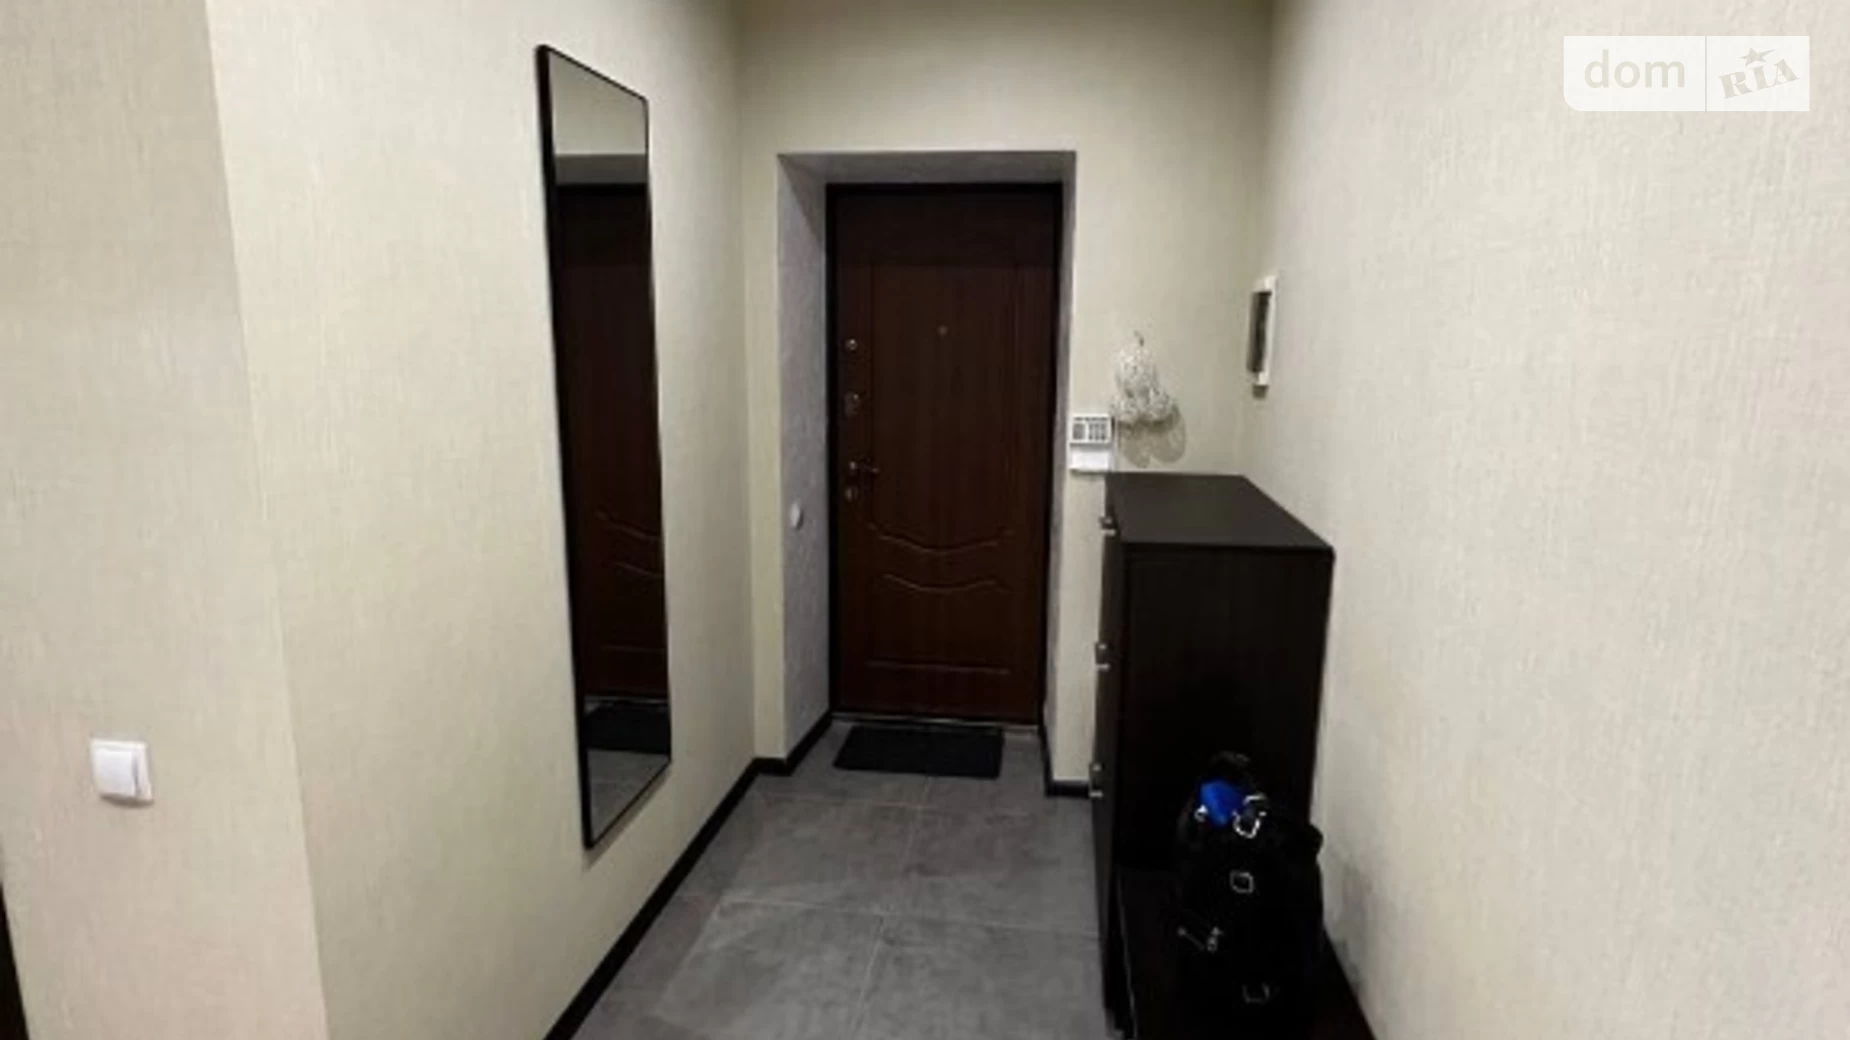 Продається 2-кімнатна квартира 75 кв. м у Хмельницькому, пр. Панаса Мирного, 1 - фото 5